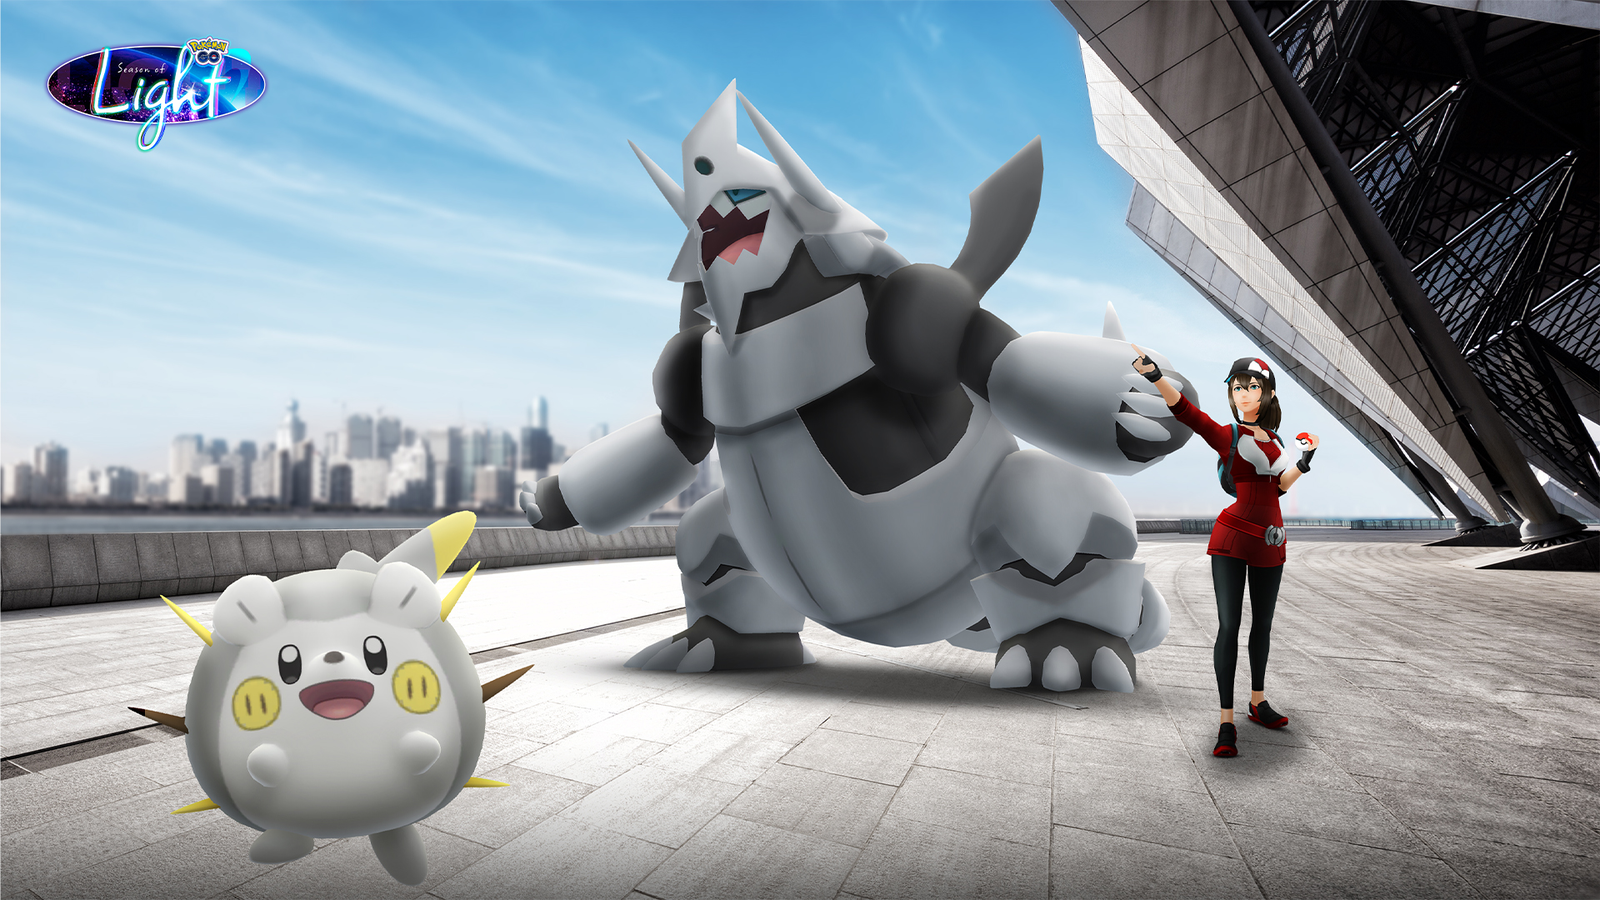 Celesteela Raid Guide for Pokémon GO: Adventures Abound